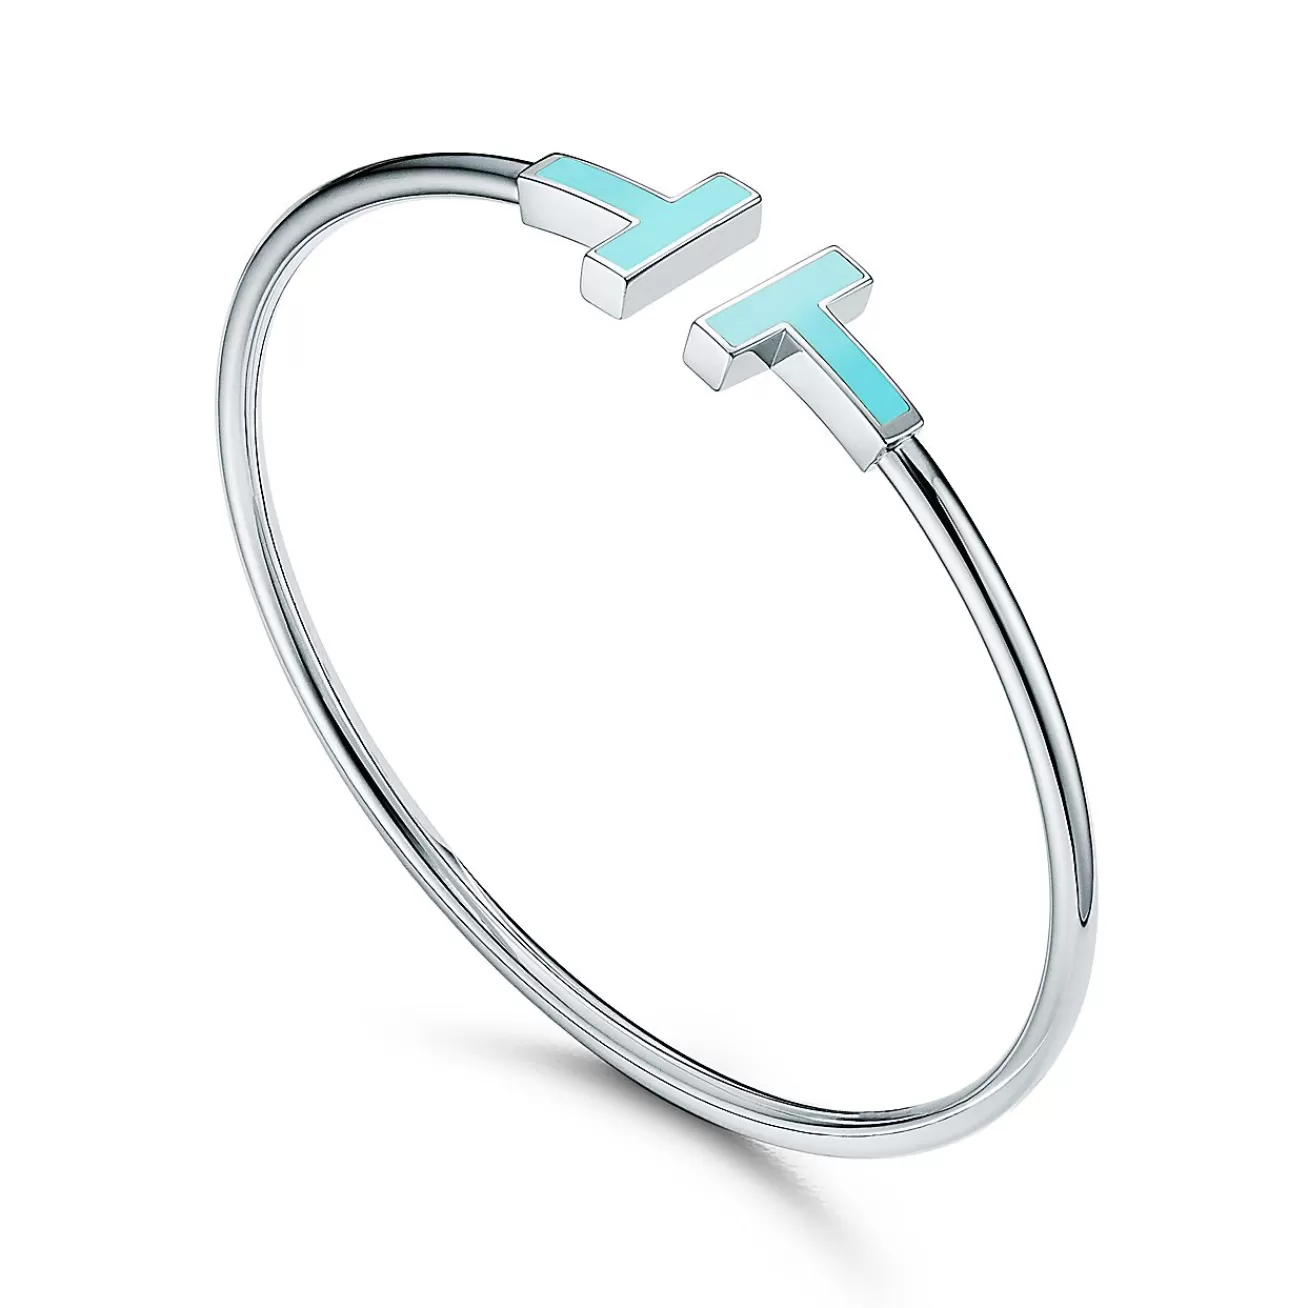 Tiffany & Co. Tiffany T turquoise wire bracelet in 18k white gold, medium. | ^ Bracelets | Colored Gemstone Jewelry